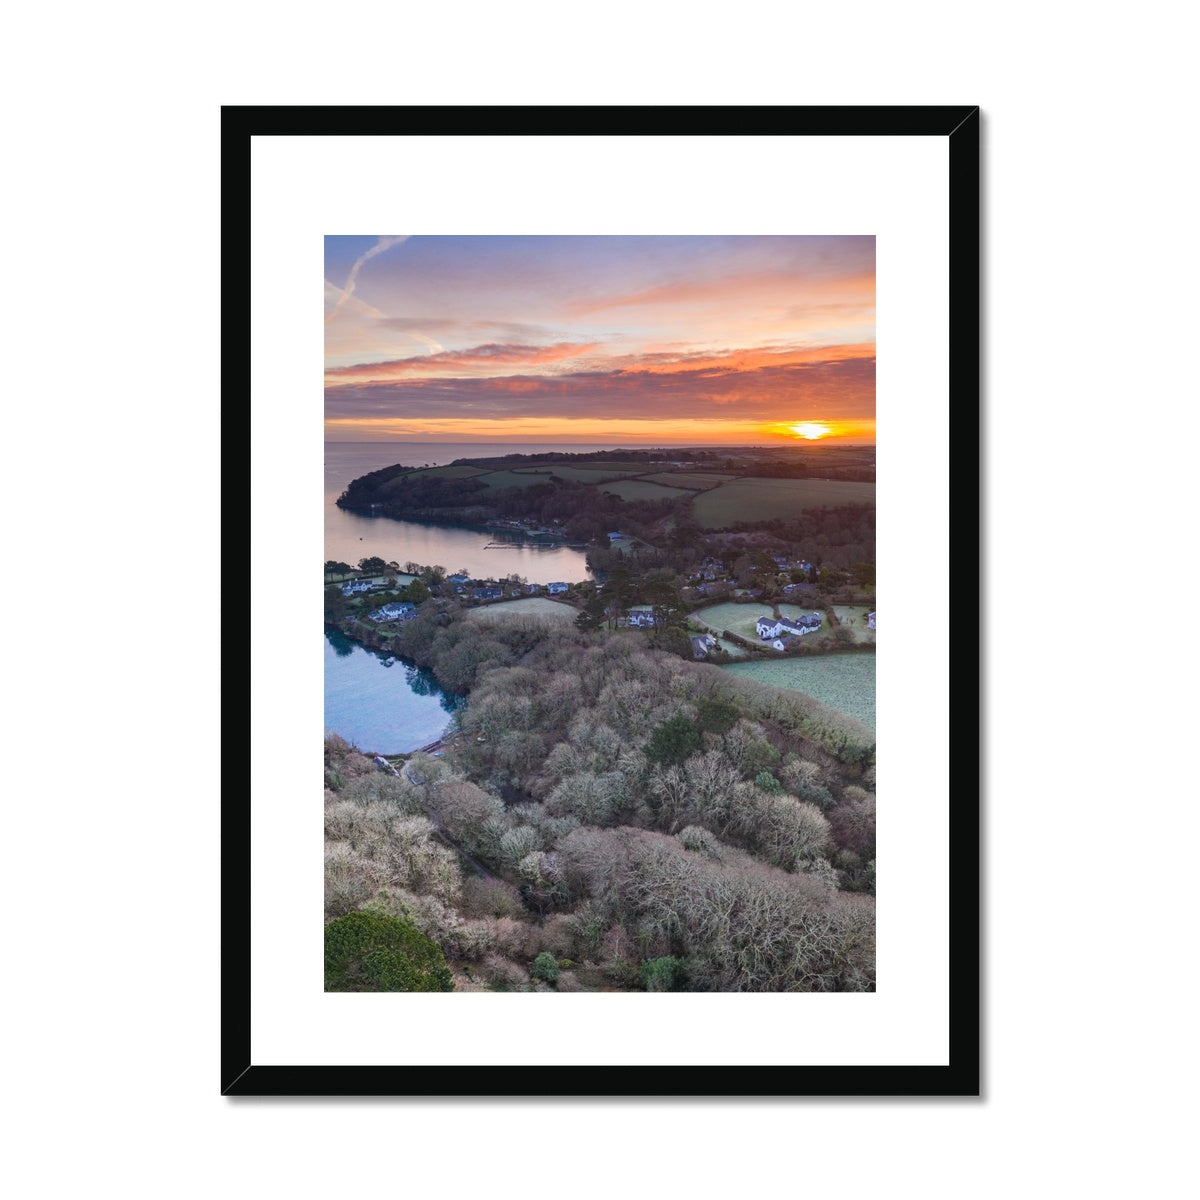 frenchmans creek sunrise framed print